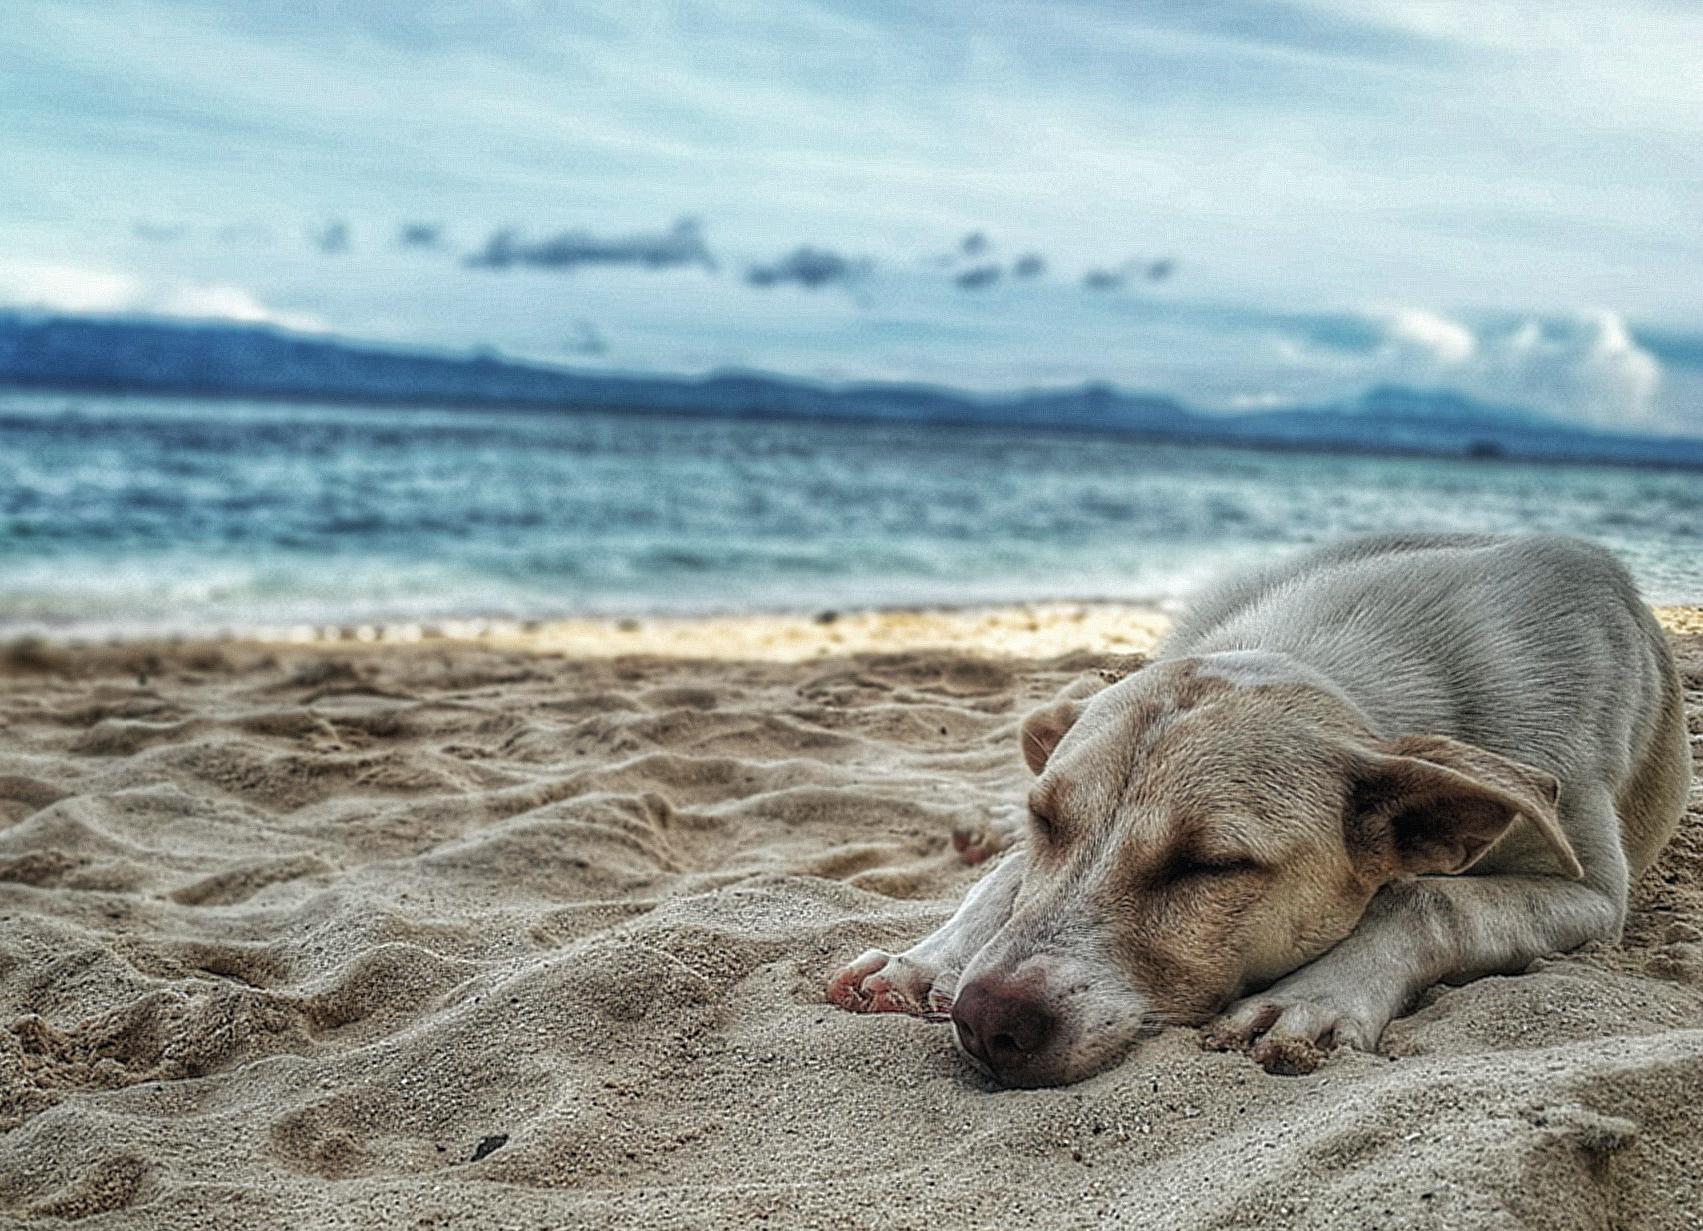 Dark Yellow Labrador Retriever Lying on the Sea Shore